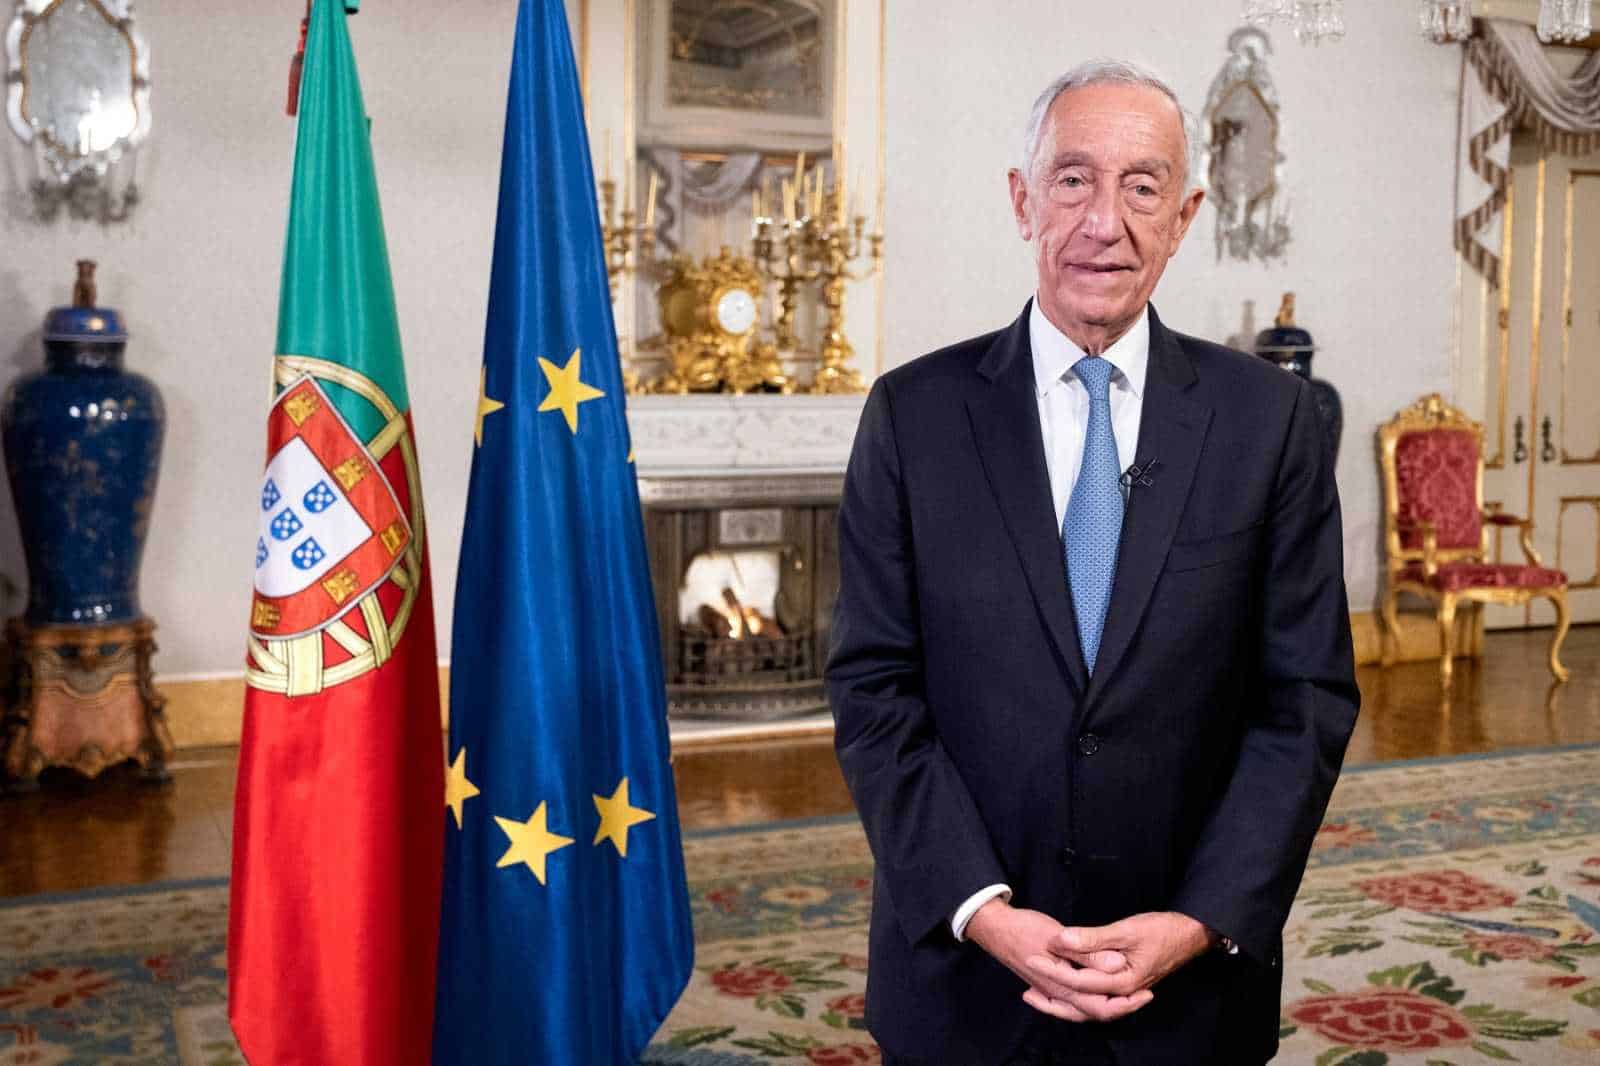 presidente de portugal